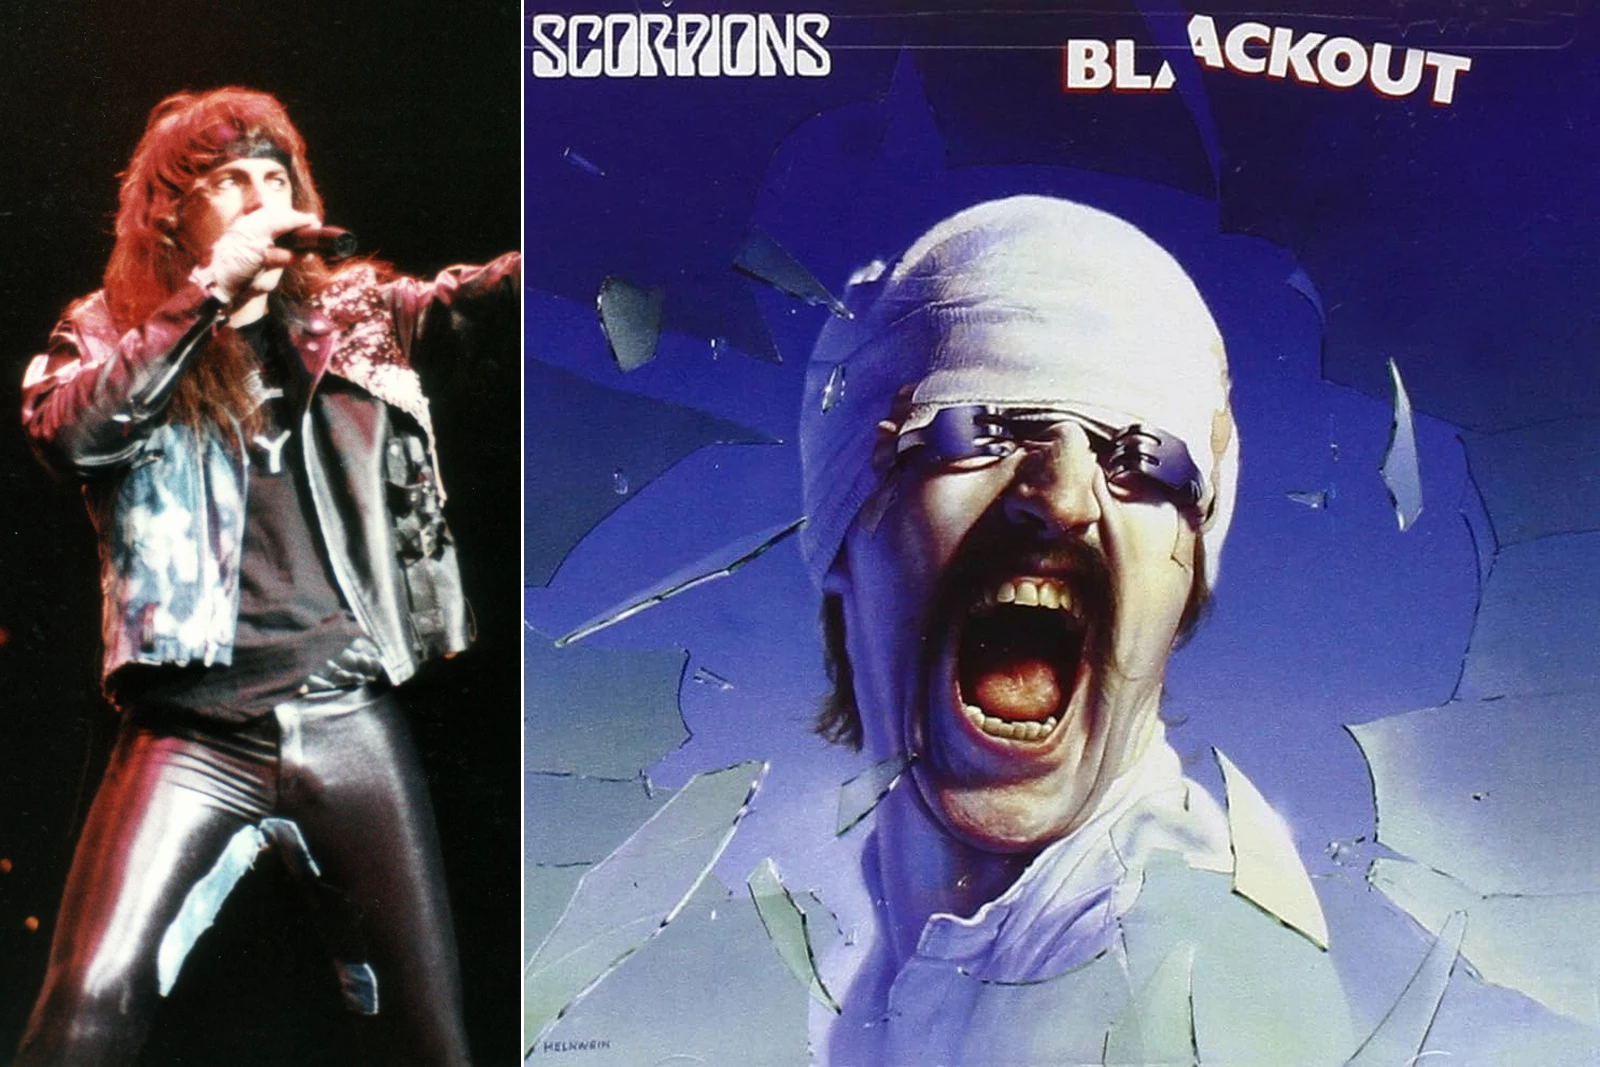 How Don Dokken Helped Rescue Scorpions' 'Blackout'